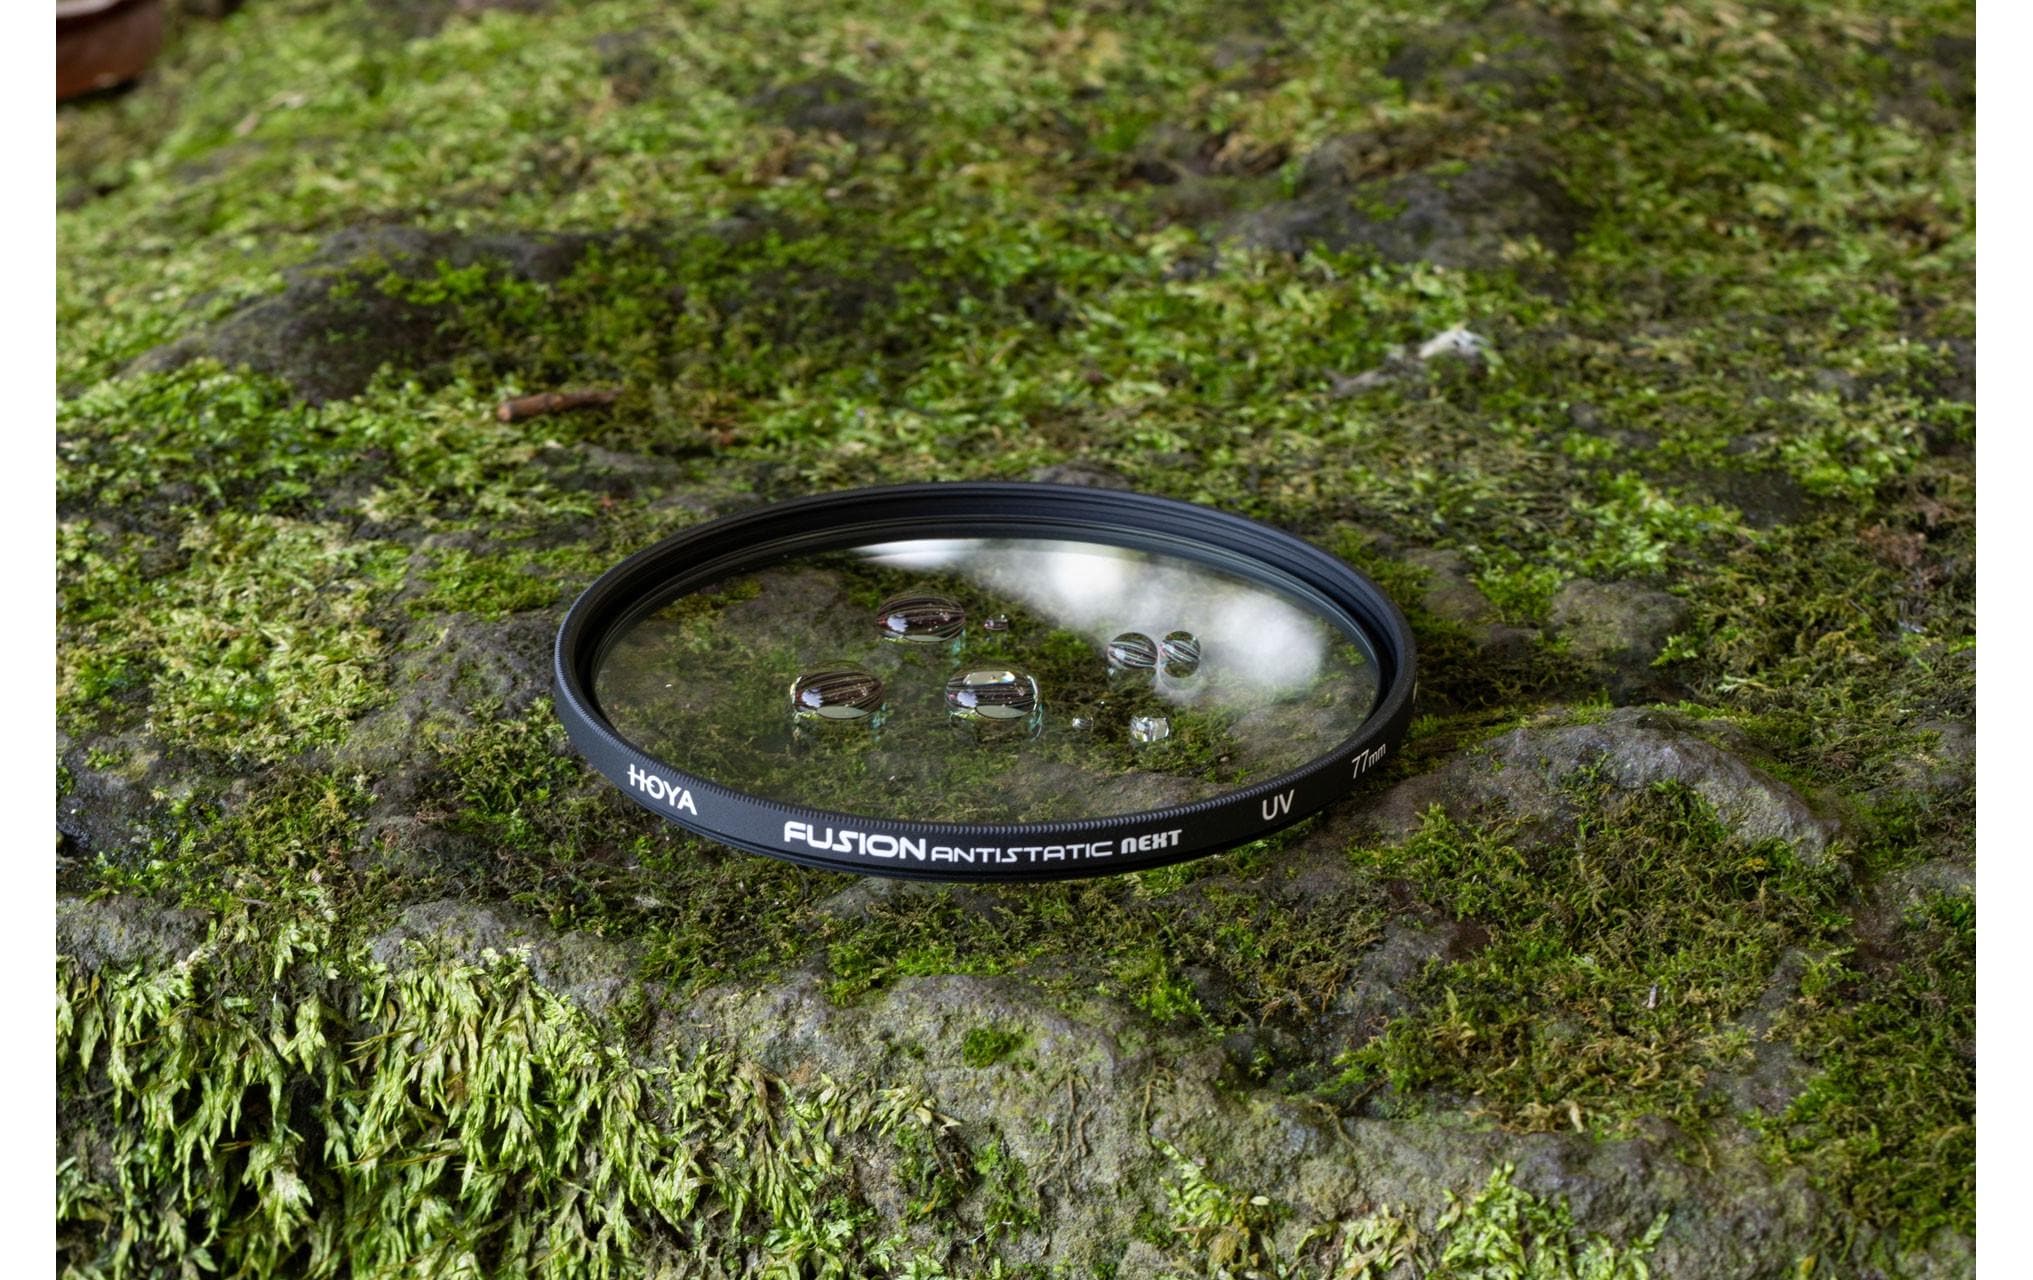 Hoya Objektivfilter Fusion Antistatic Next UV – 52 mm